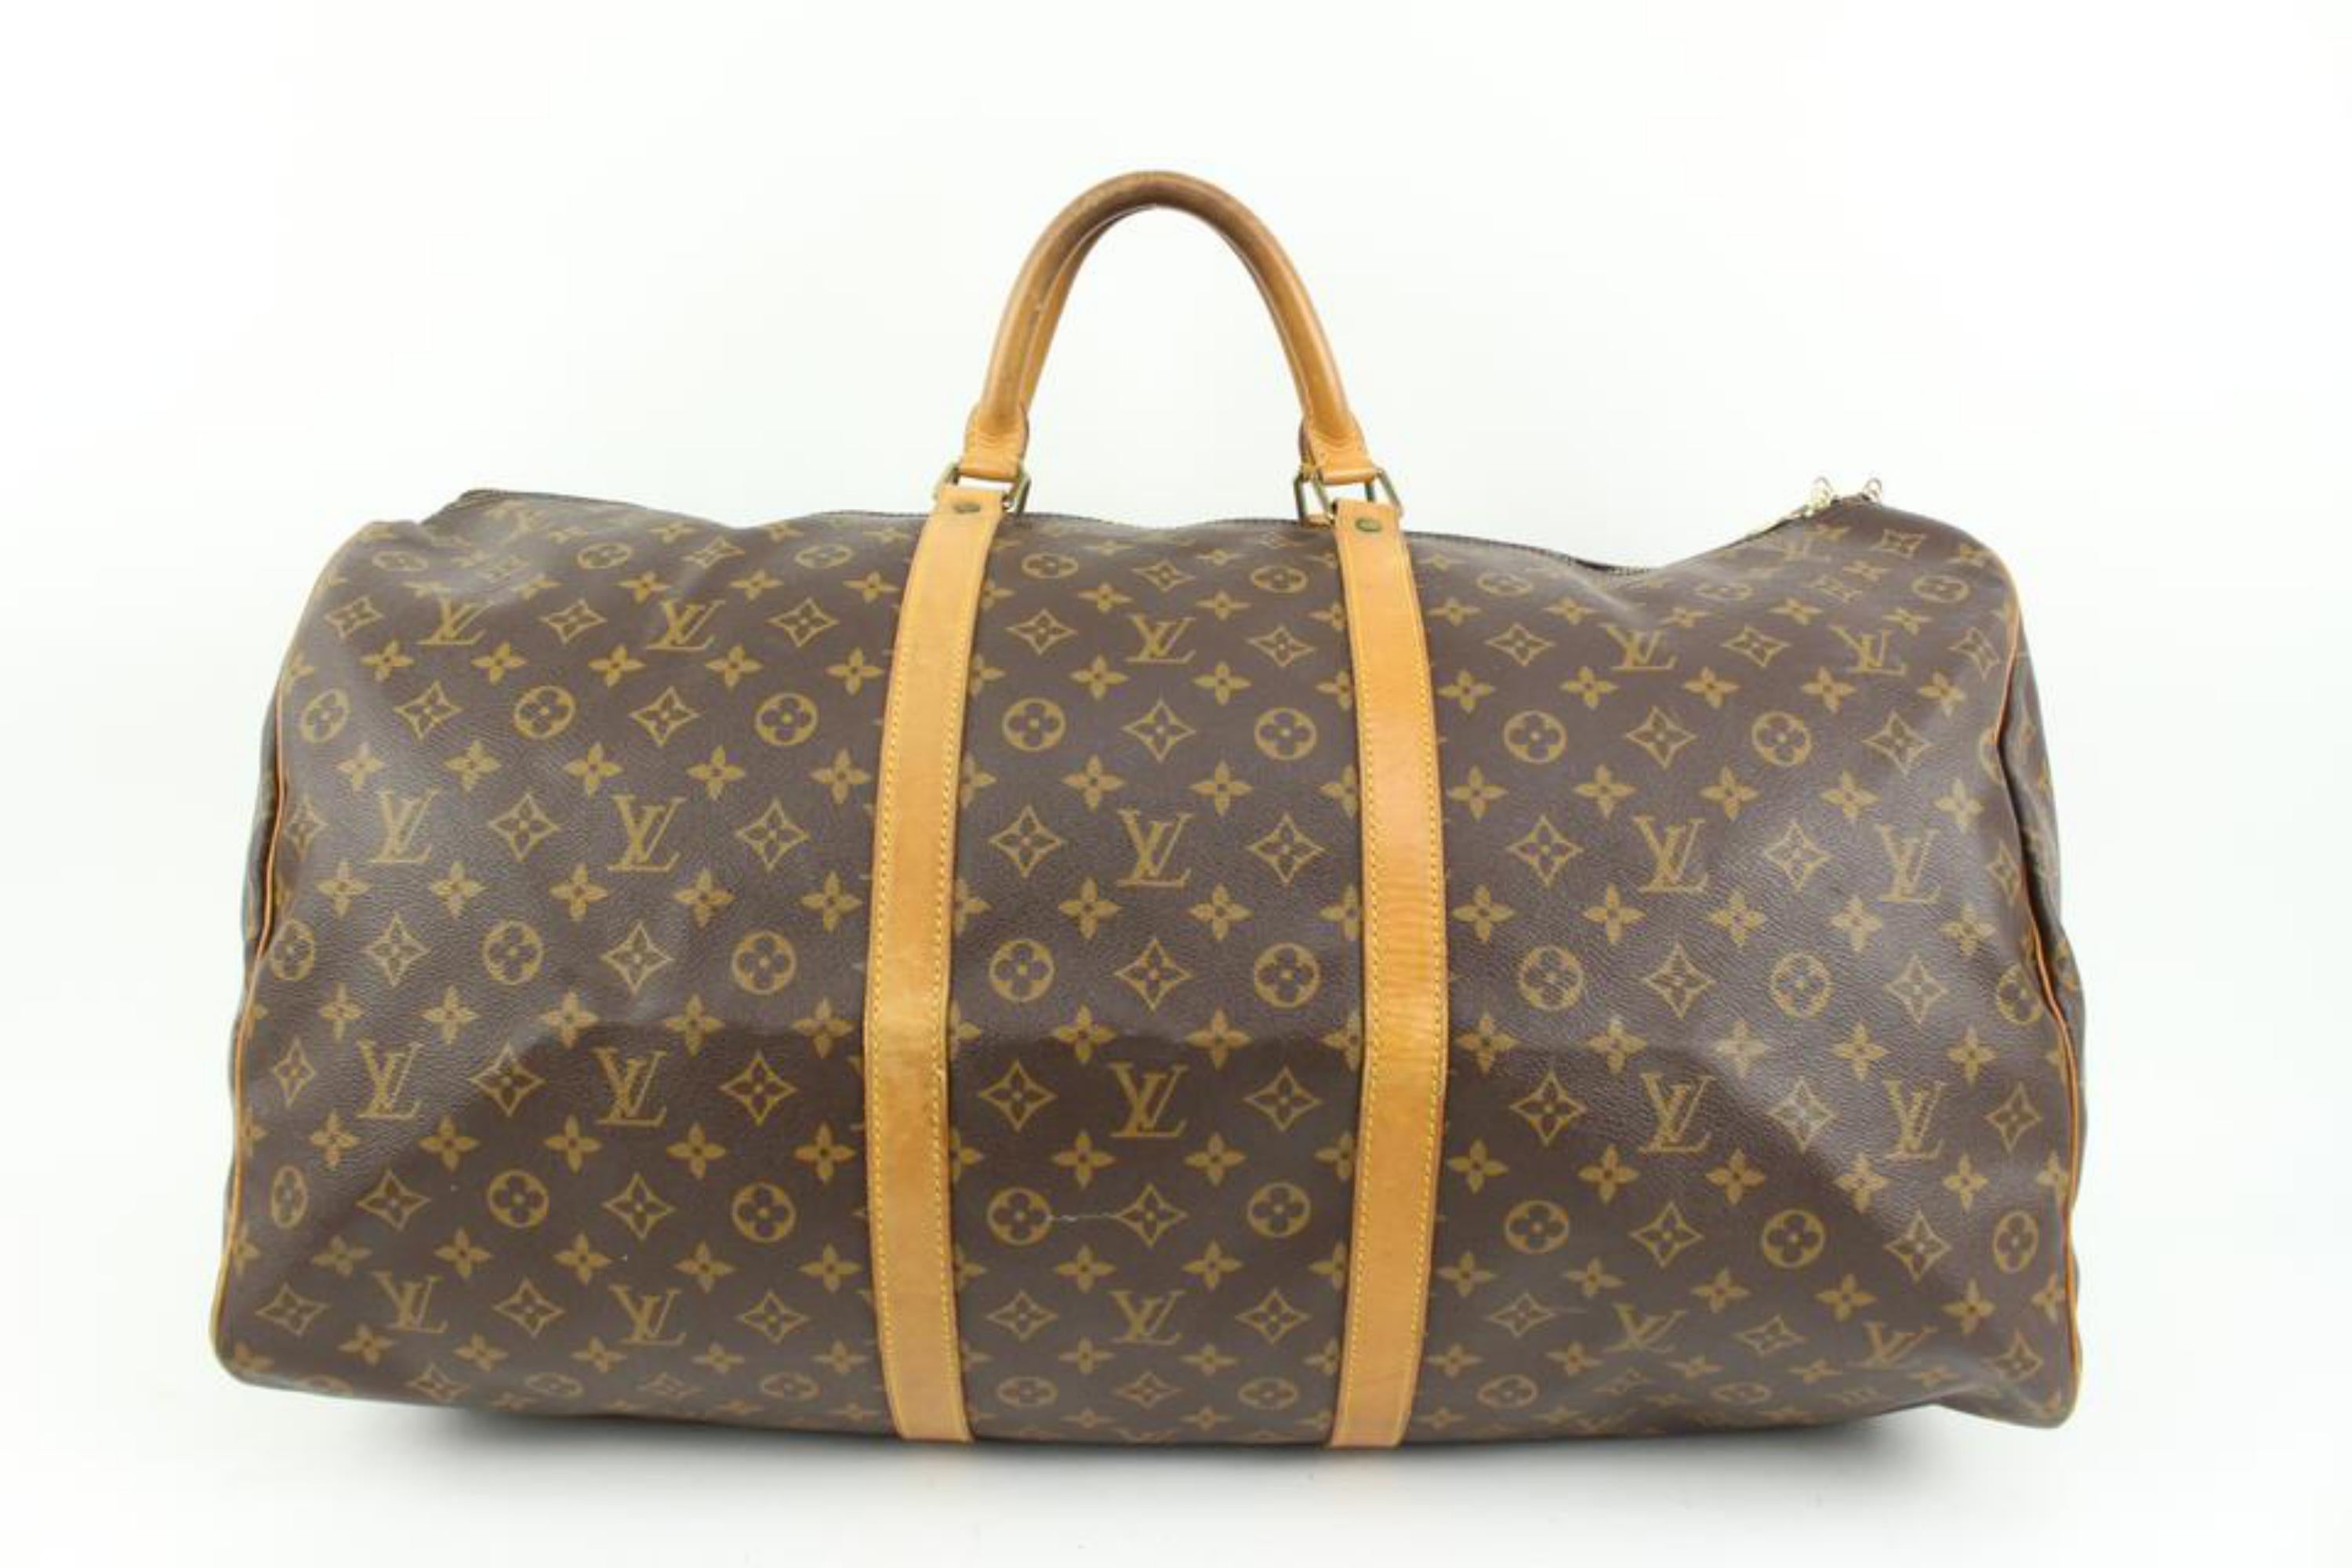 Louis Vuitton Large Monogram Keepall 60 Boston Duffle Bag 5lz425s 2